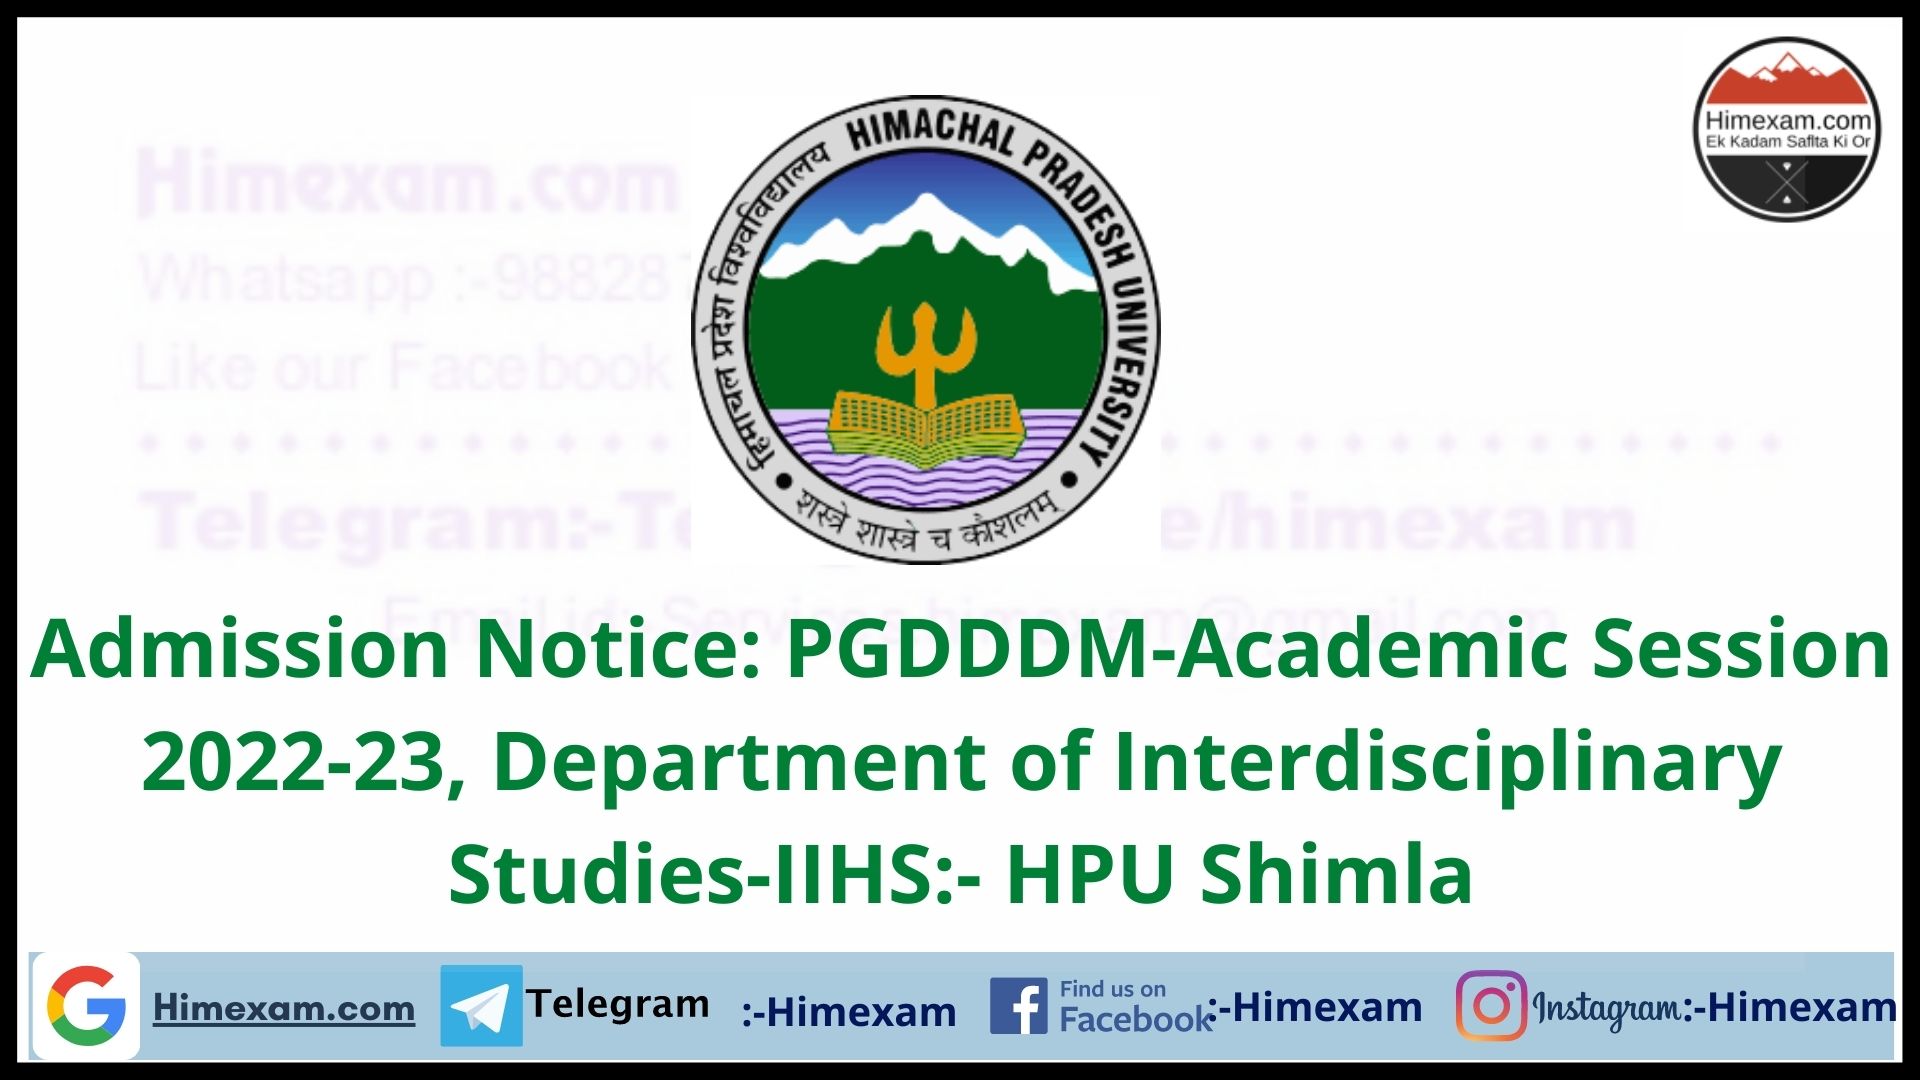 Admission Notice: PGDDDM-Academic Session 2022-23, Department of Interdisciplinary Studies-IIHS:- HPU Shimla